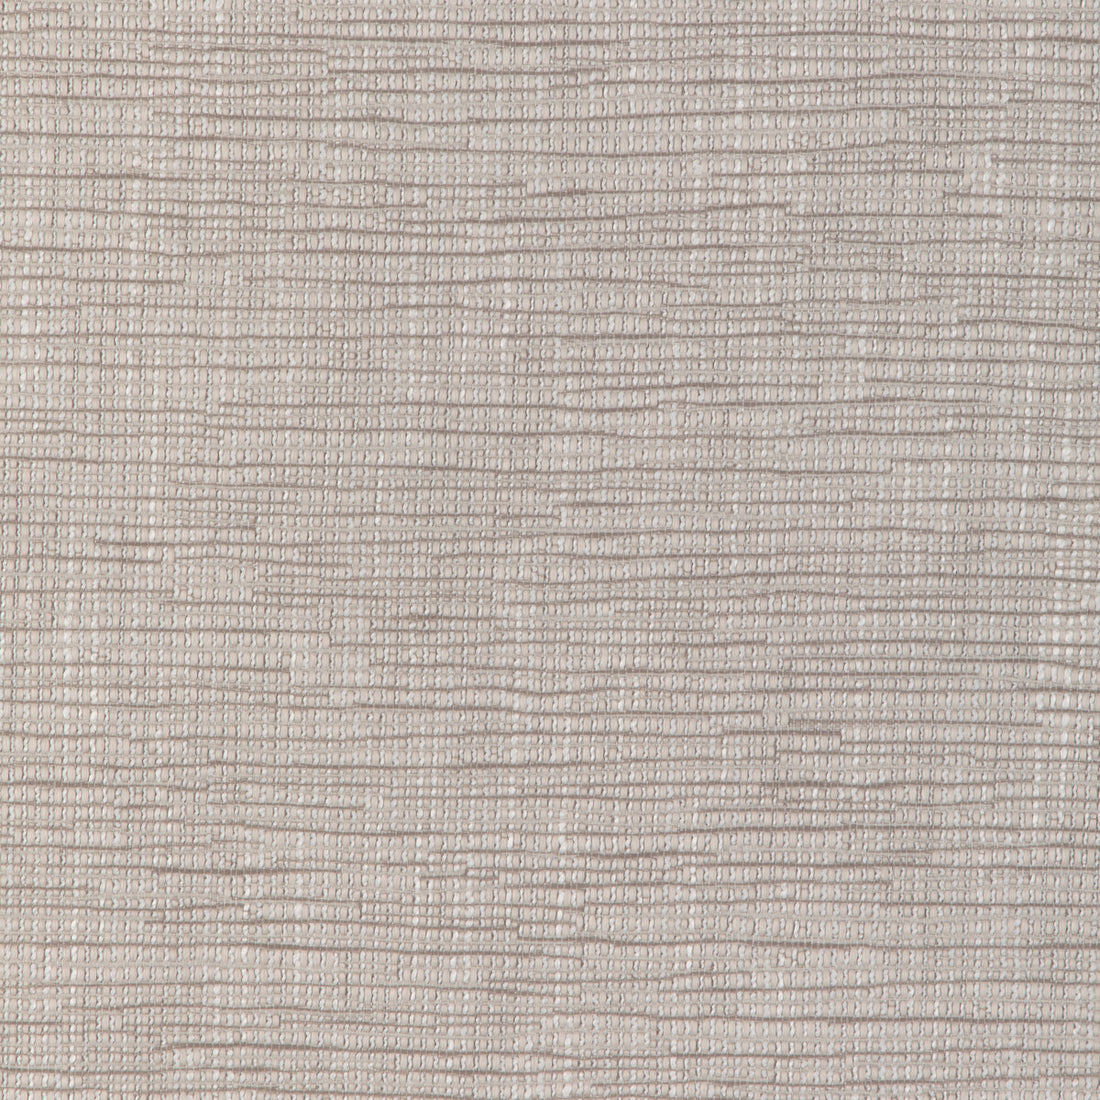 Kravet Smart fabric in 36668-1101 color - pattern 36668.1101.0 - by Kravet Smart in the Performance Kravetarmor collection